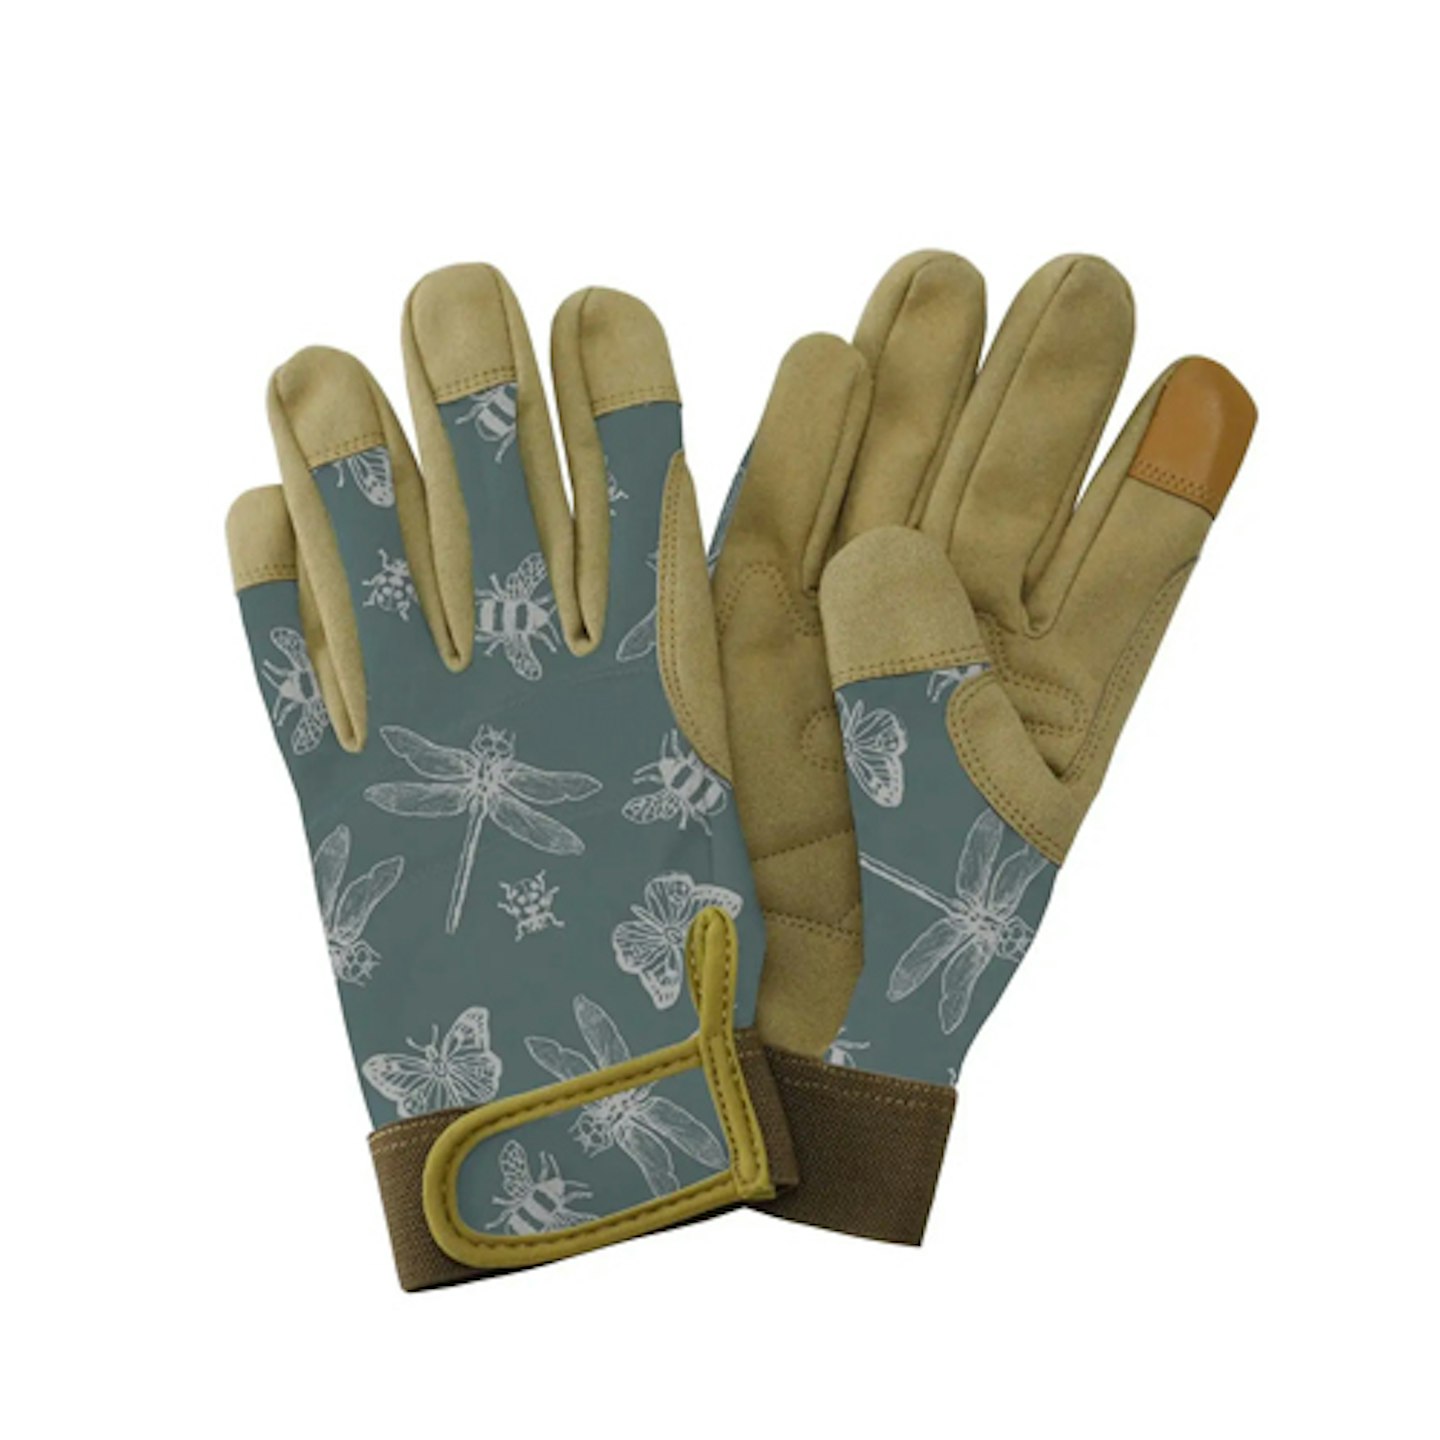 Premium Comfort Gloves Insects Green u2013 Medium